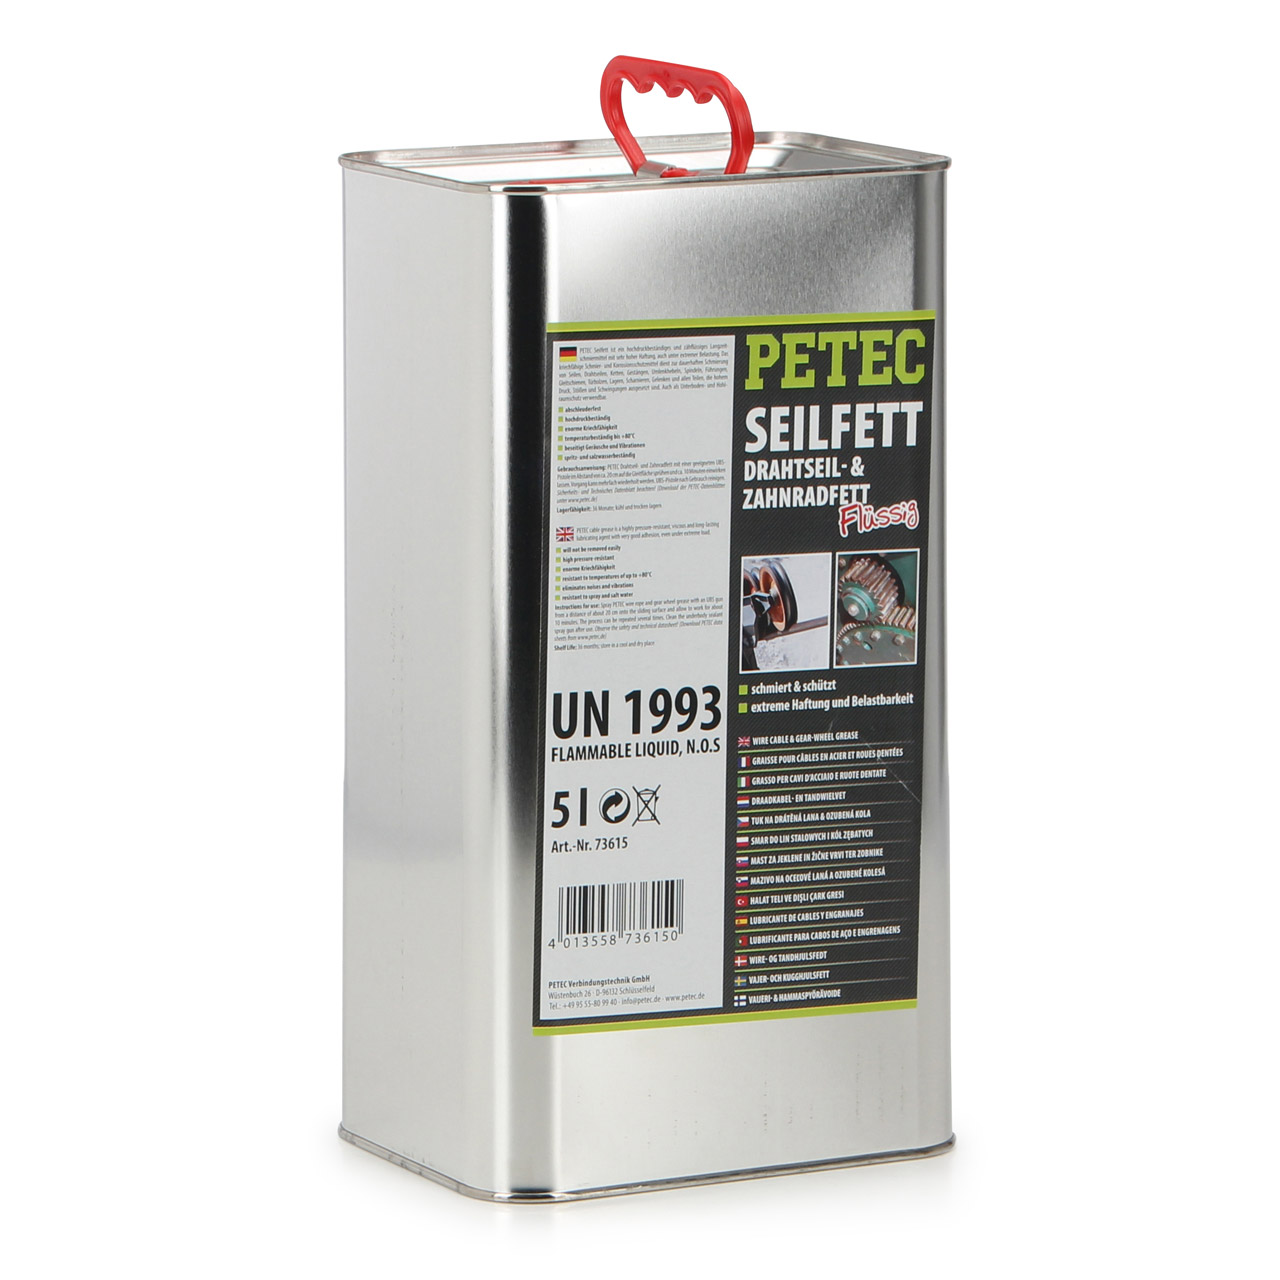 PETEC 73615 Seilfett Drahtseil-& Zahnradfett Seilschutz Fett flüssig 5L 5 Liter